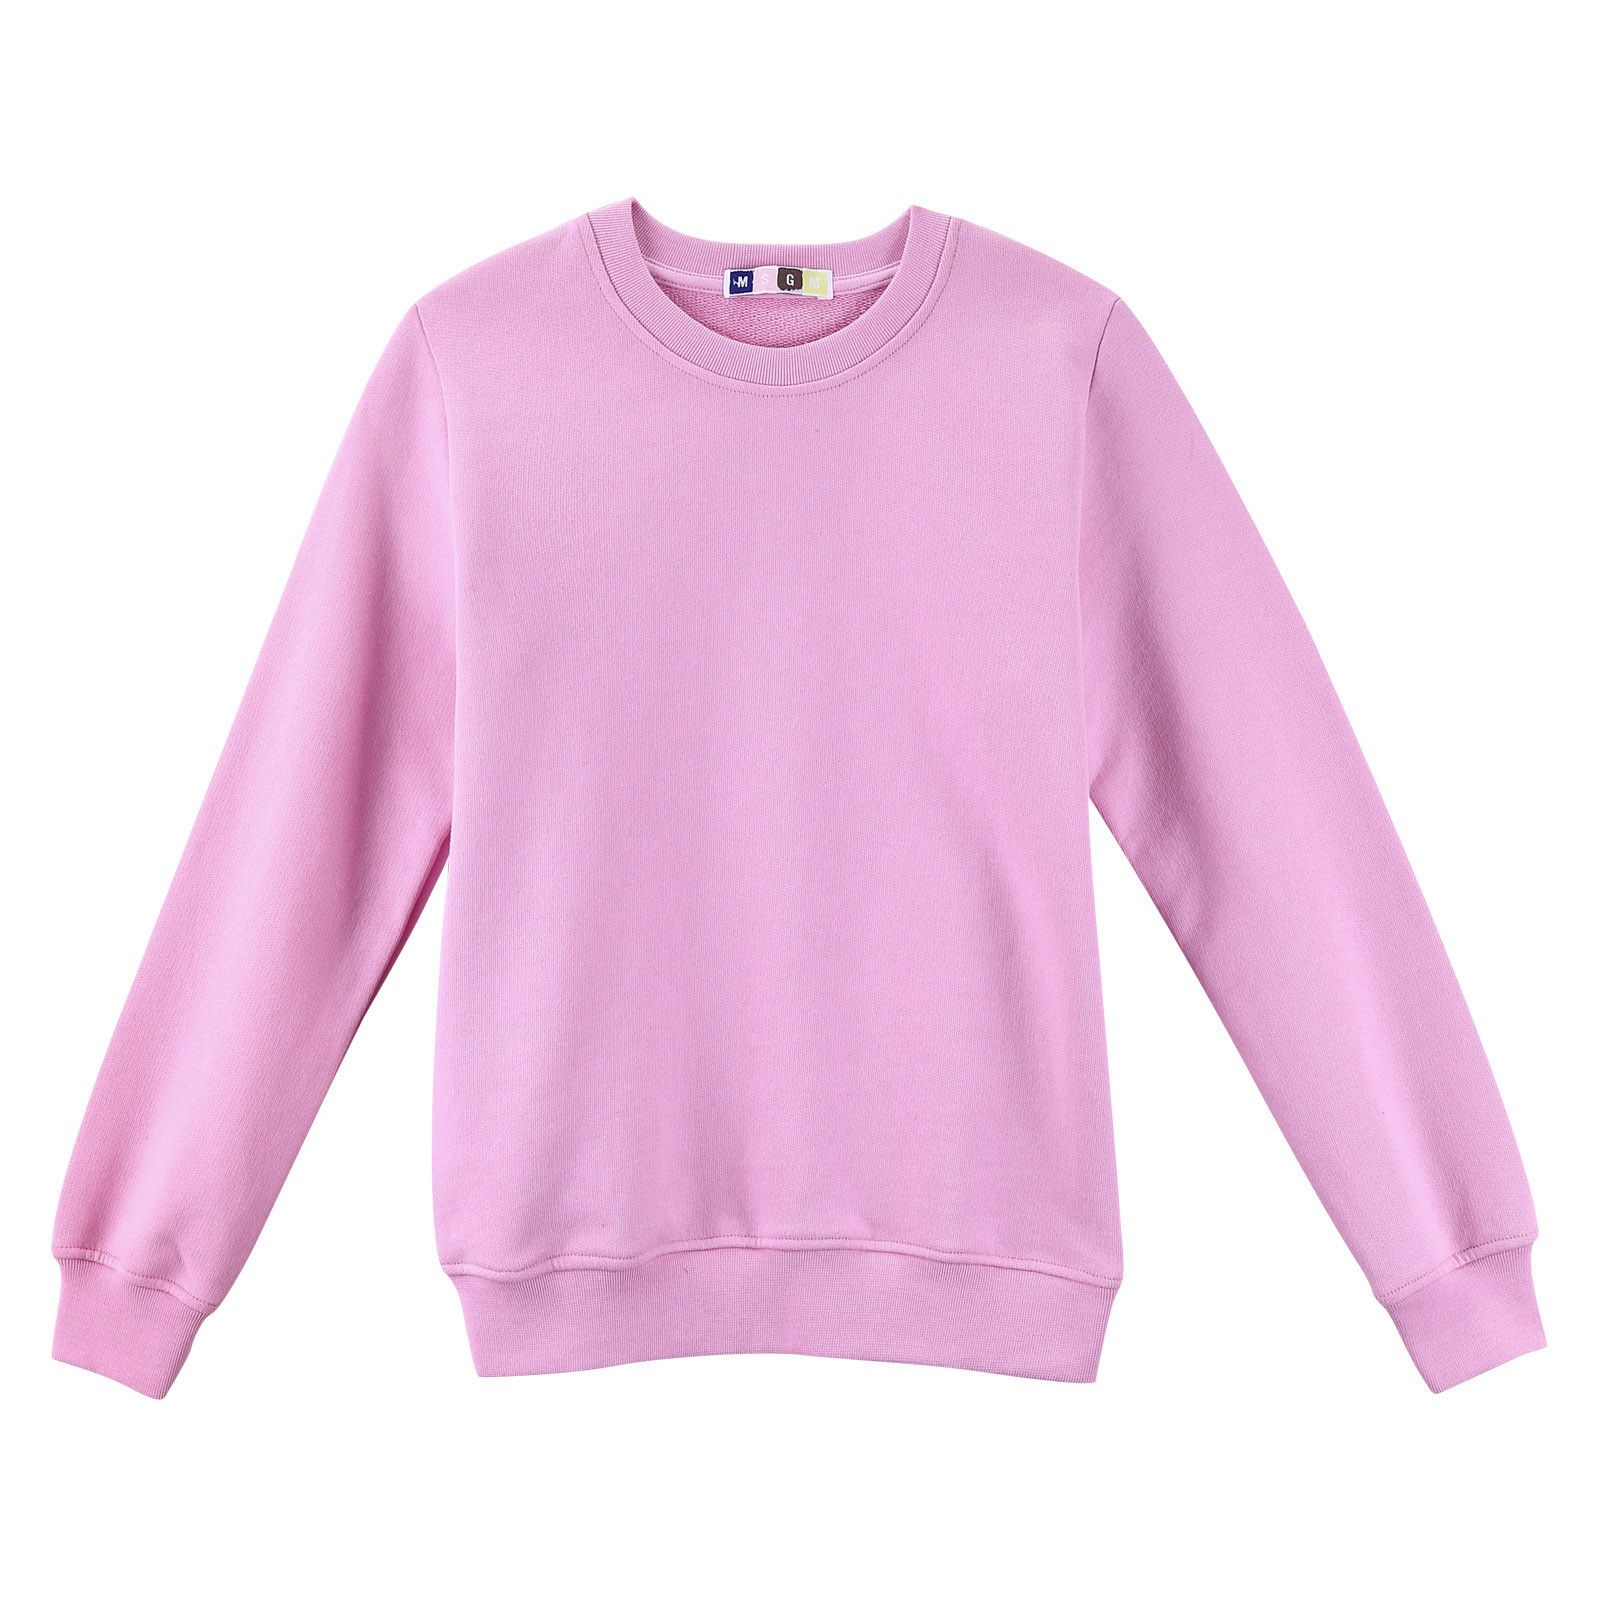 Girls Pink Cotton Sweatshirt With Ribbed Cuffs - CÉMAROSE | Children's Fashion Store - 1